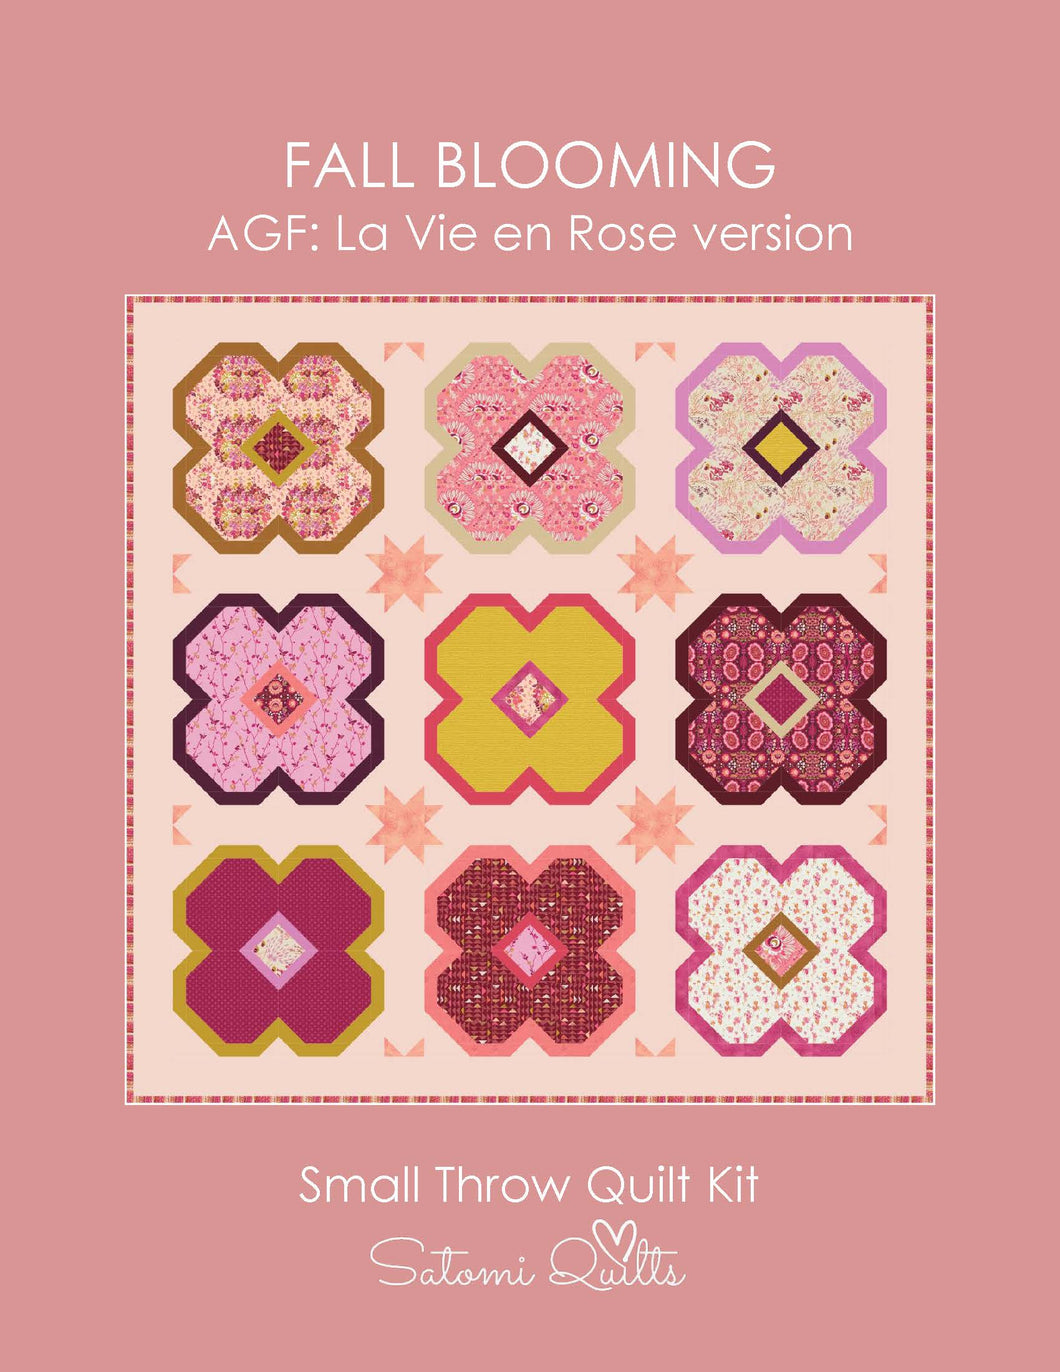 FALL BLOOMING (La Vie en Rose) - Small Throw Quilt Kit